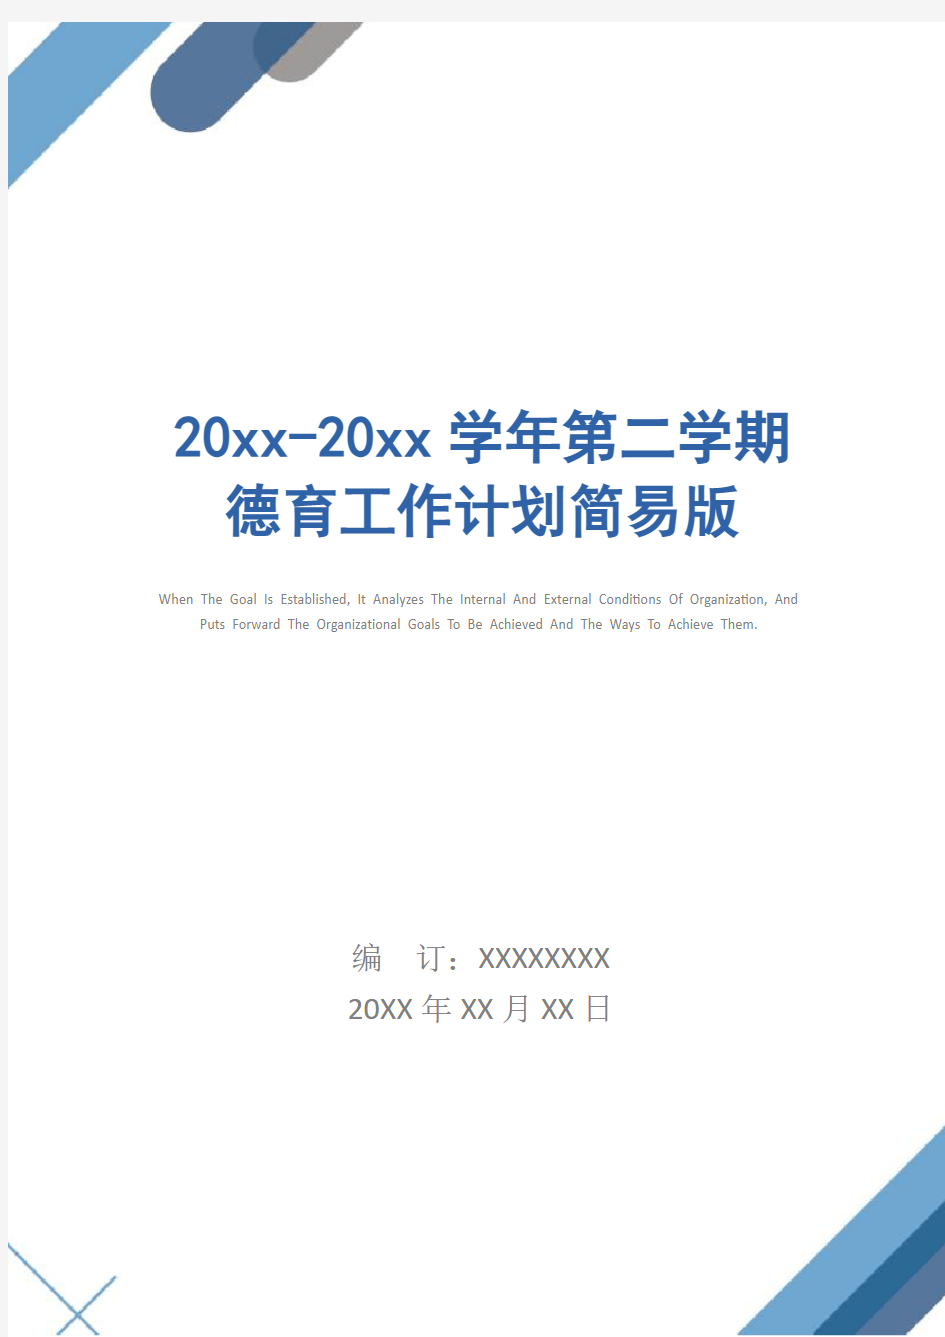 20xx-20xx学年第二学期德育工作计划简易版